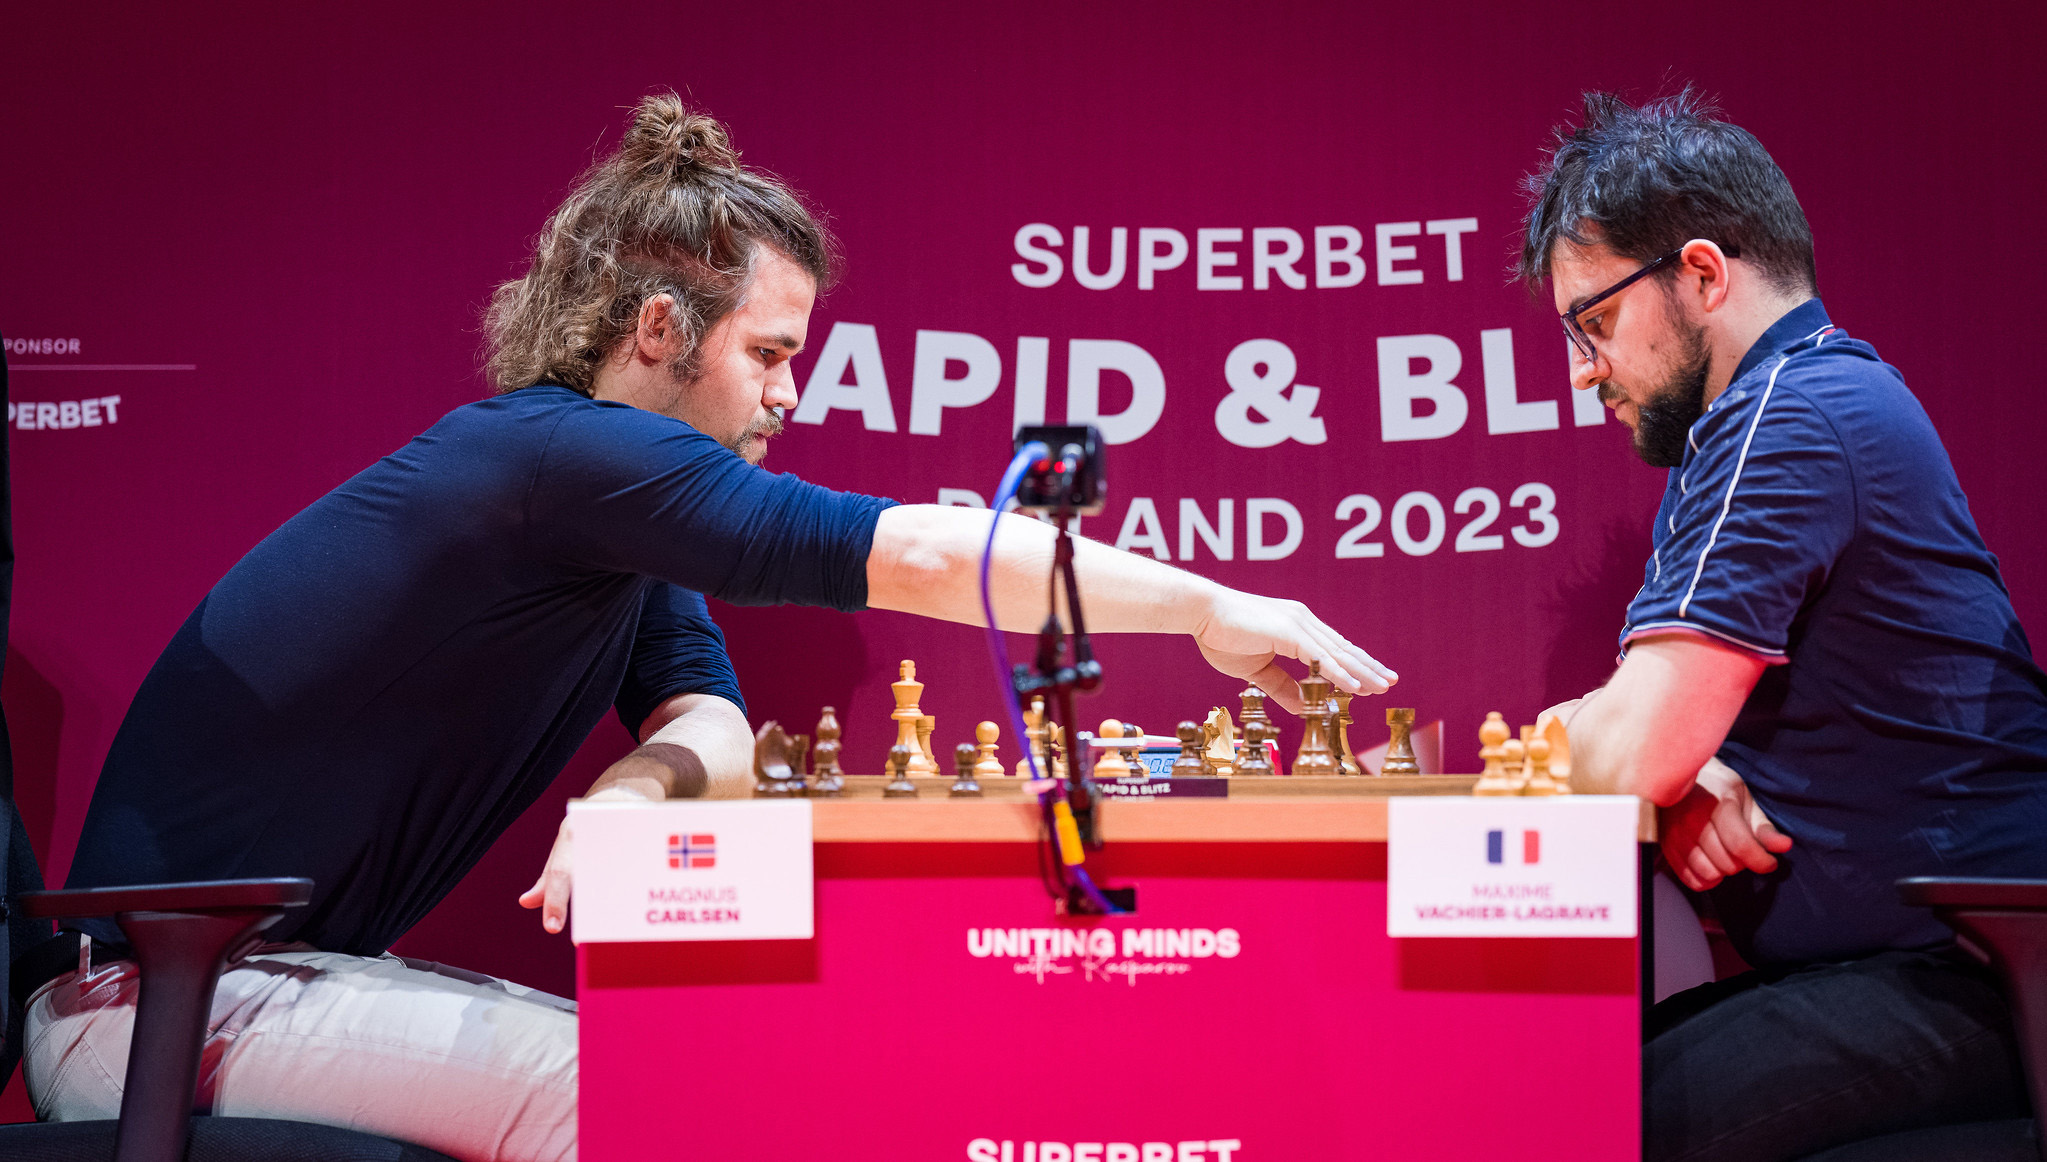 Superbet Rapid & Blitz Warsaw 2023, a chess tournament.